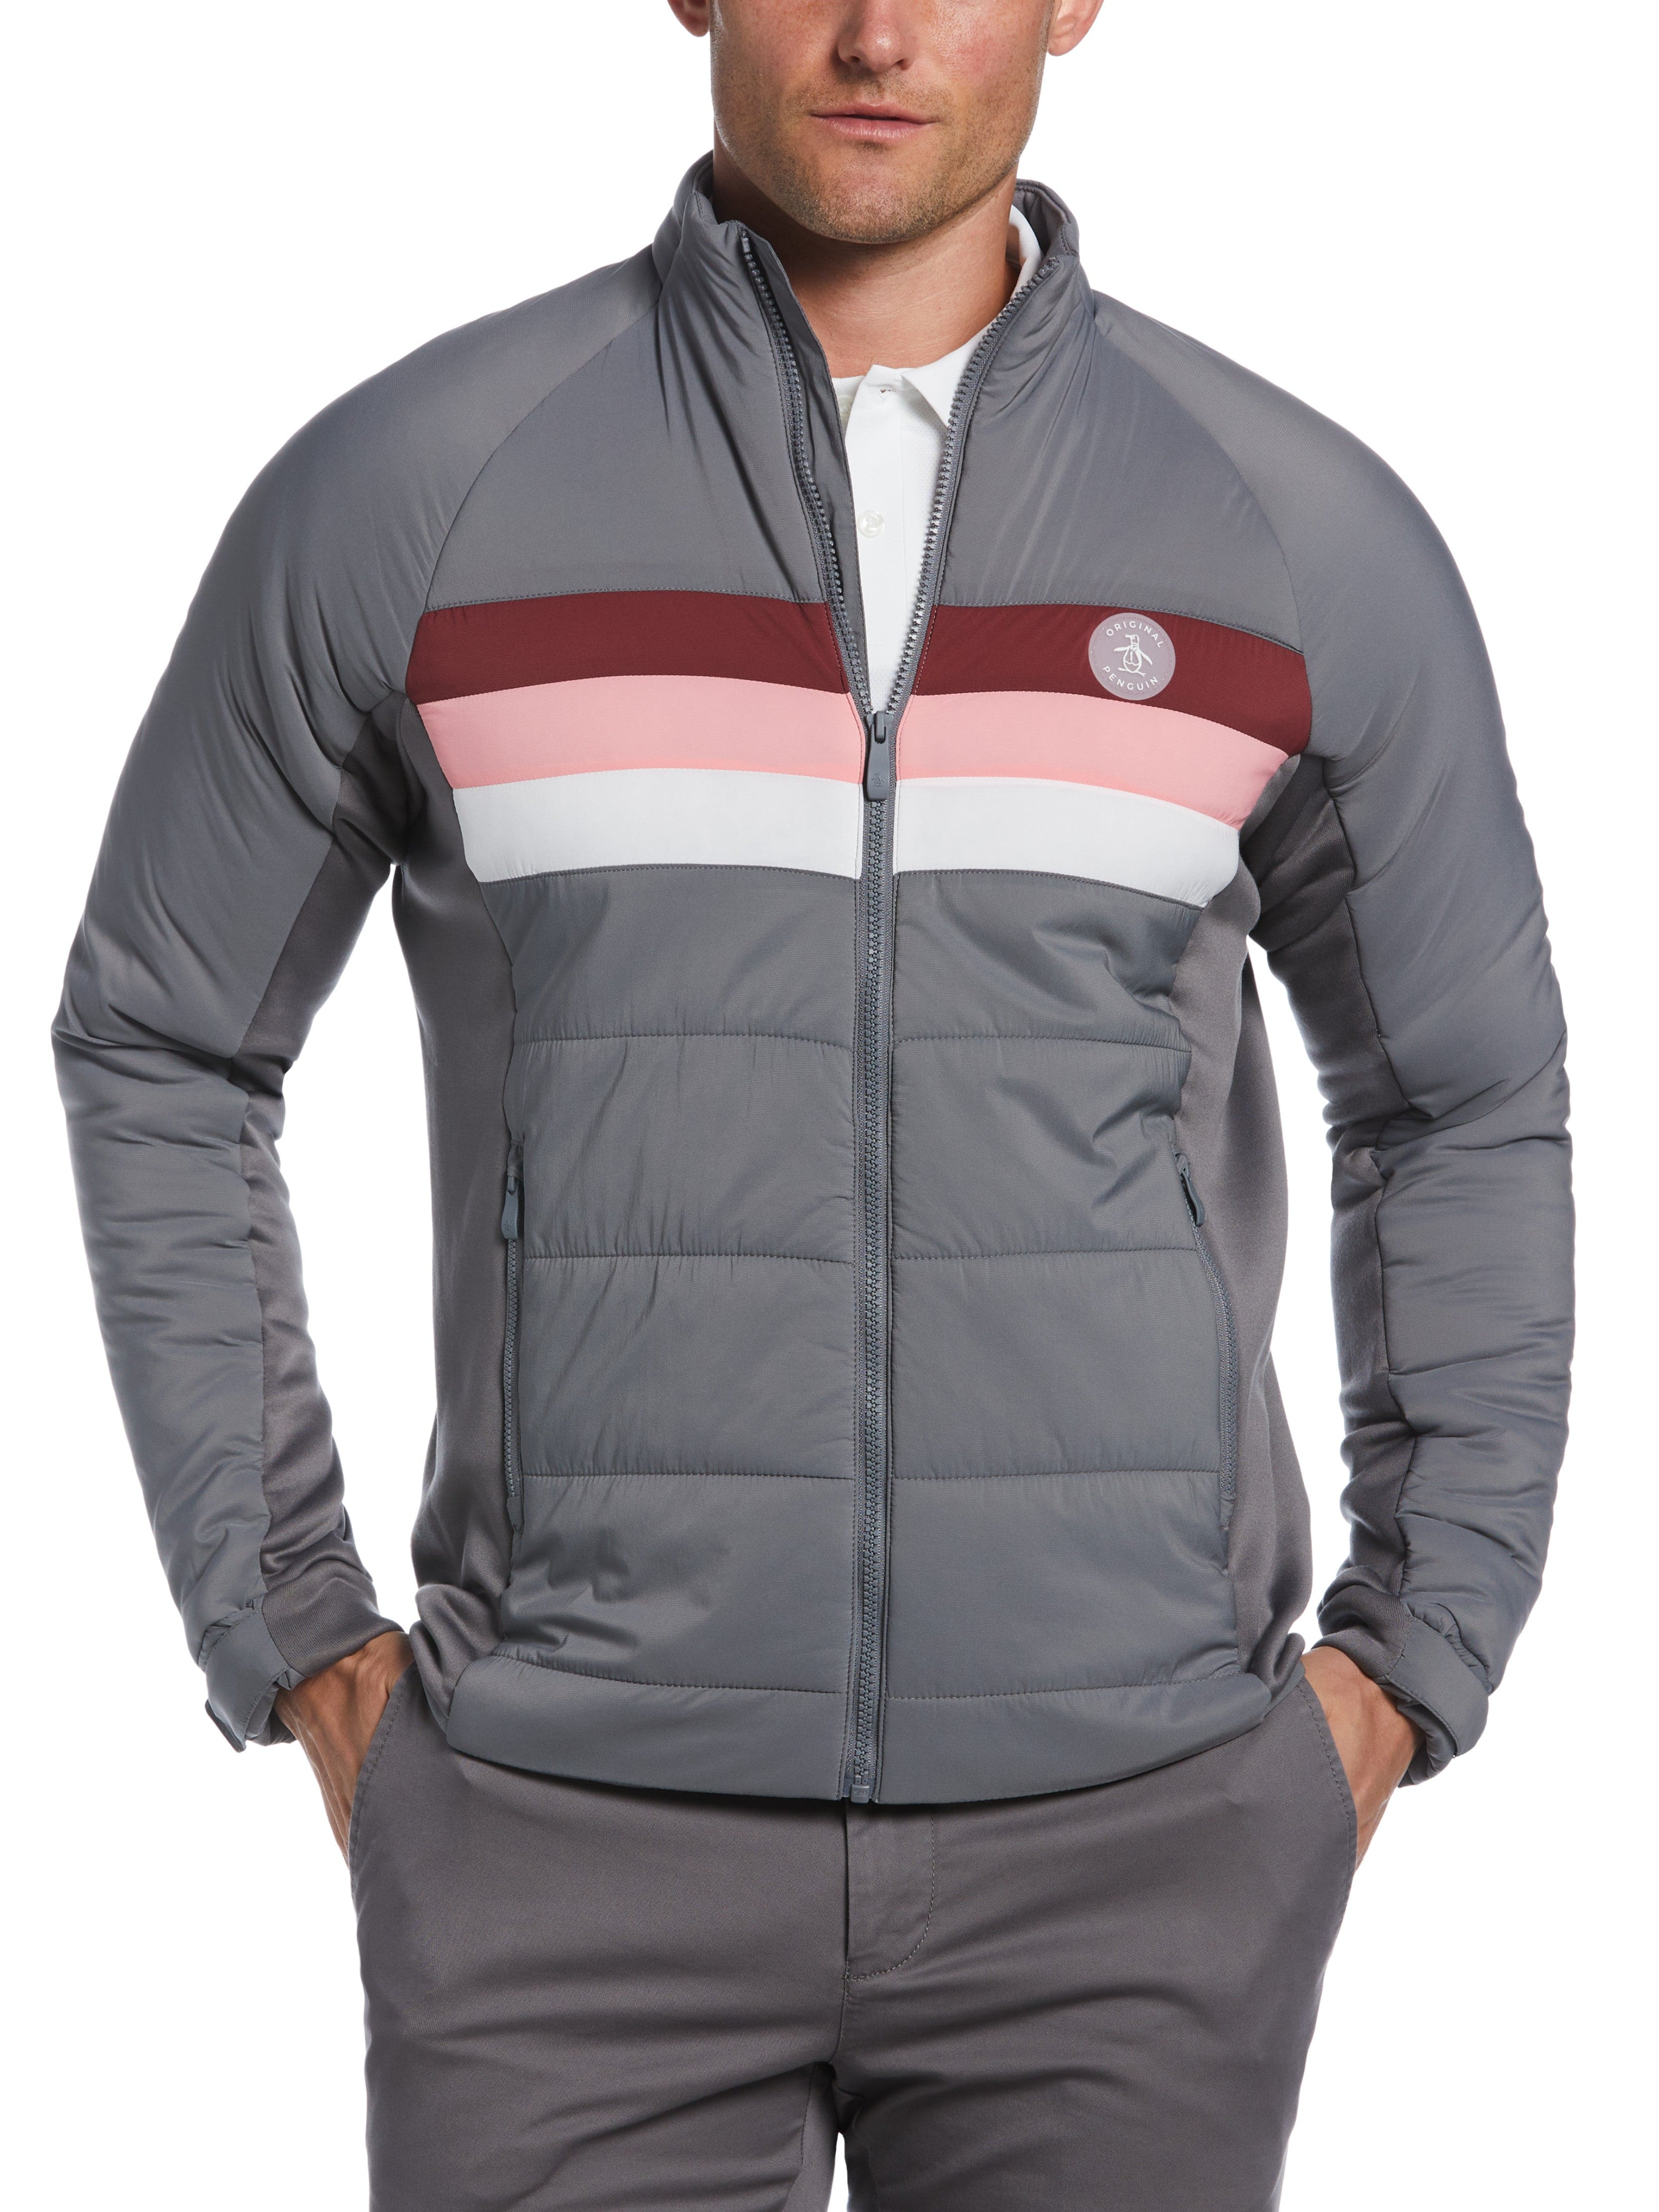 Original Penguin Mens Insulated 70s Golf Jacket Top, Size Medium, Quiet Shade Gray, 100% Nylon | Golf Apparel Shop